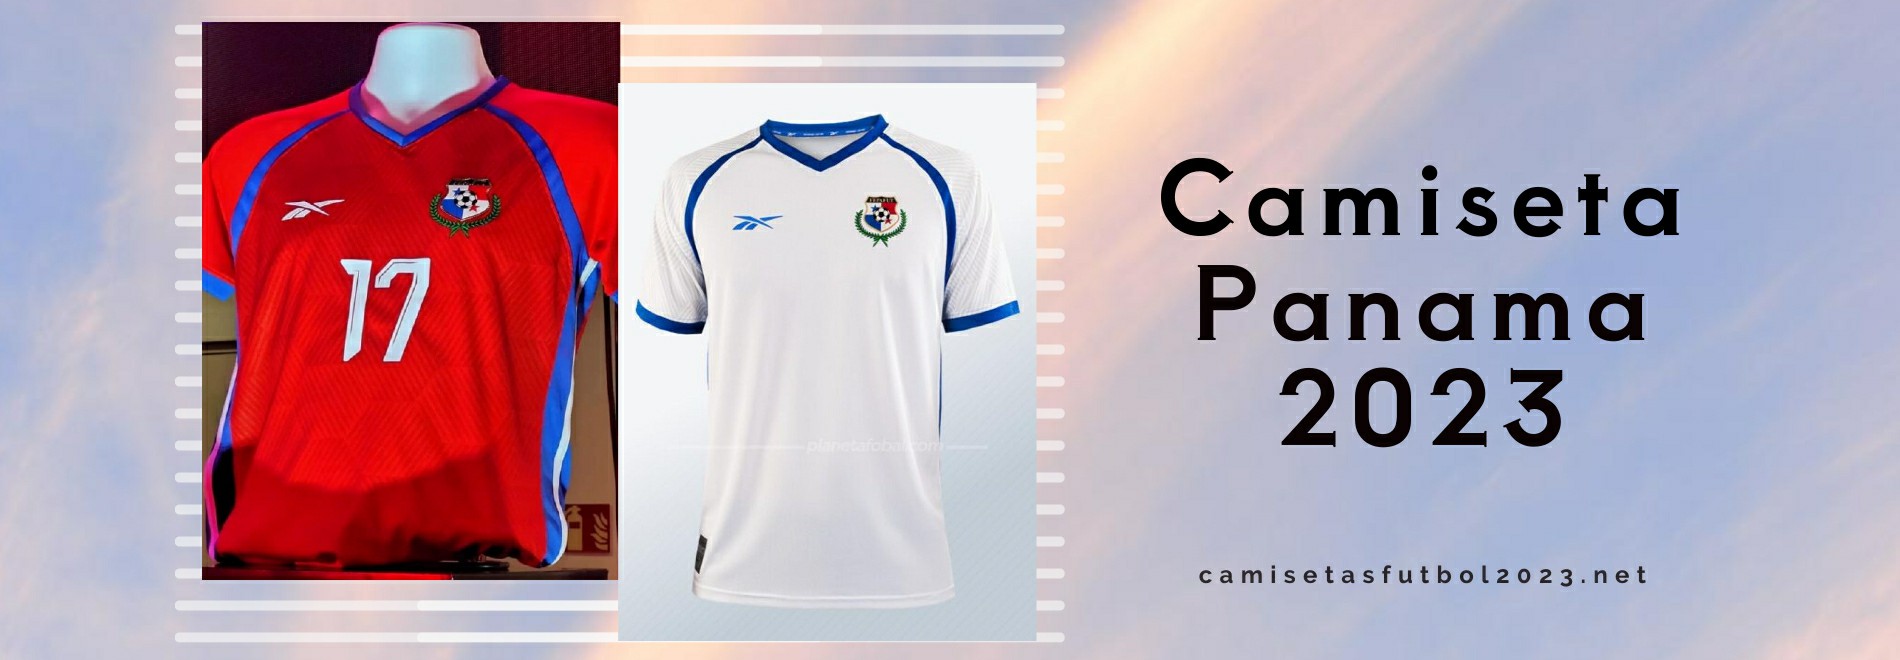 Camiseta Panama 2023-2024